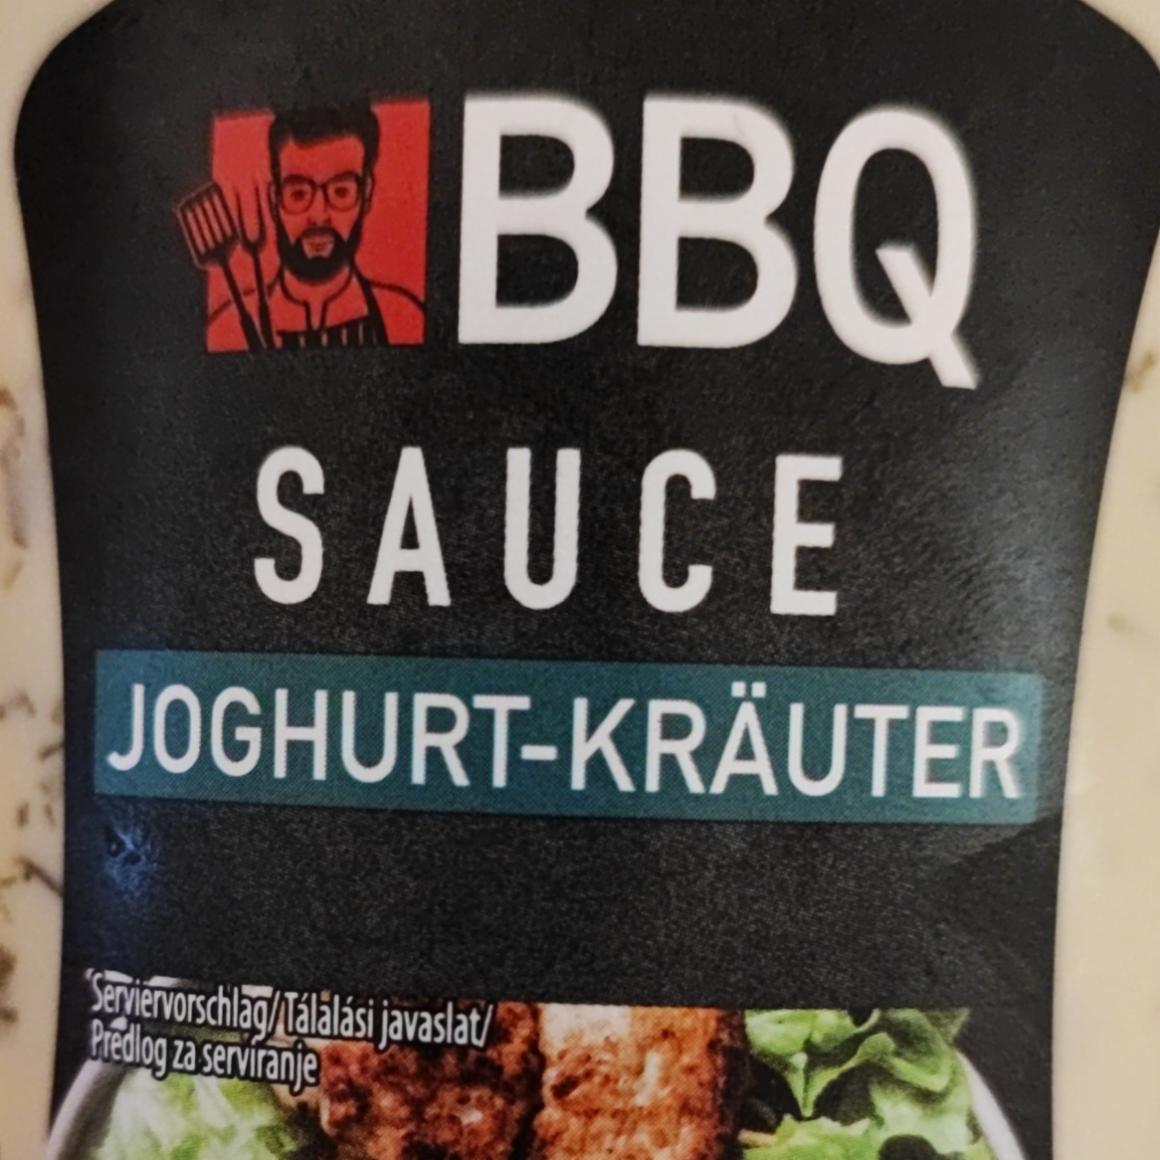 Képek - Sauce joghurt-kräuter BBQ